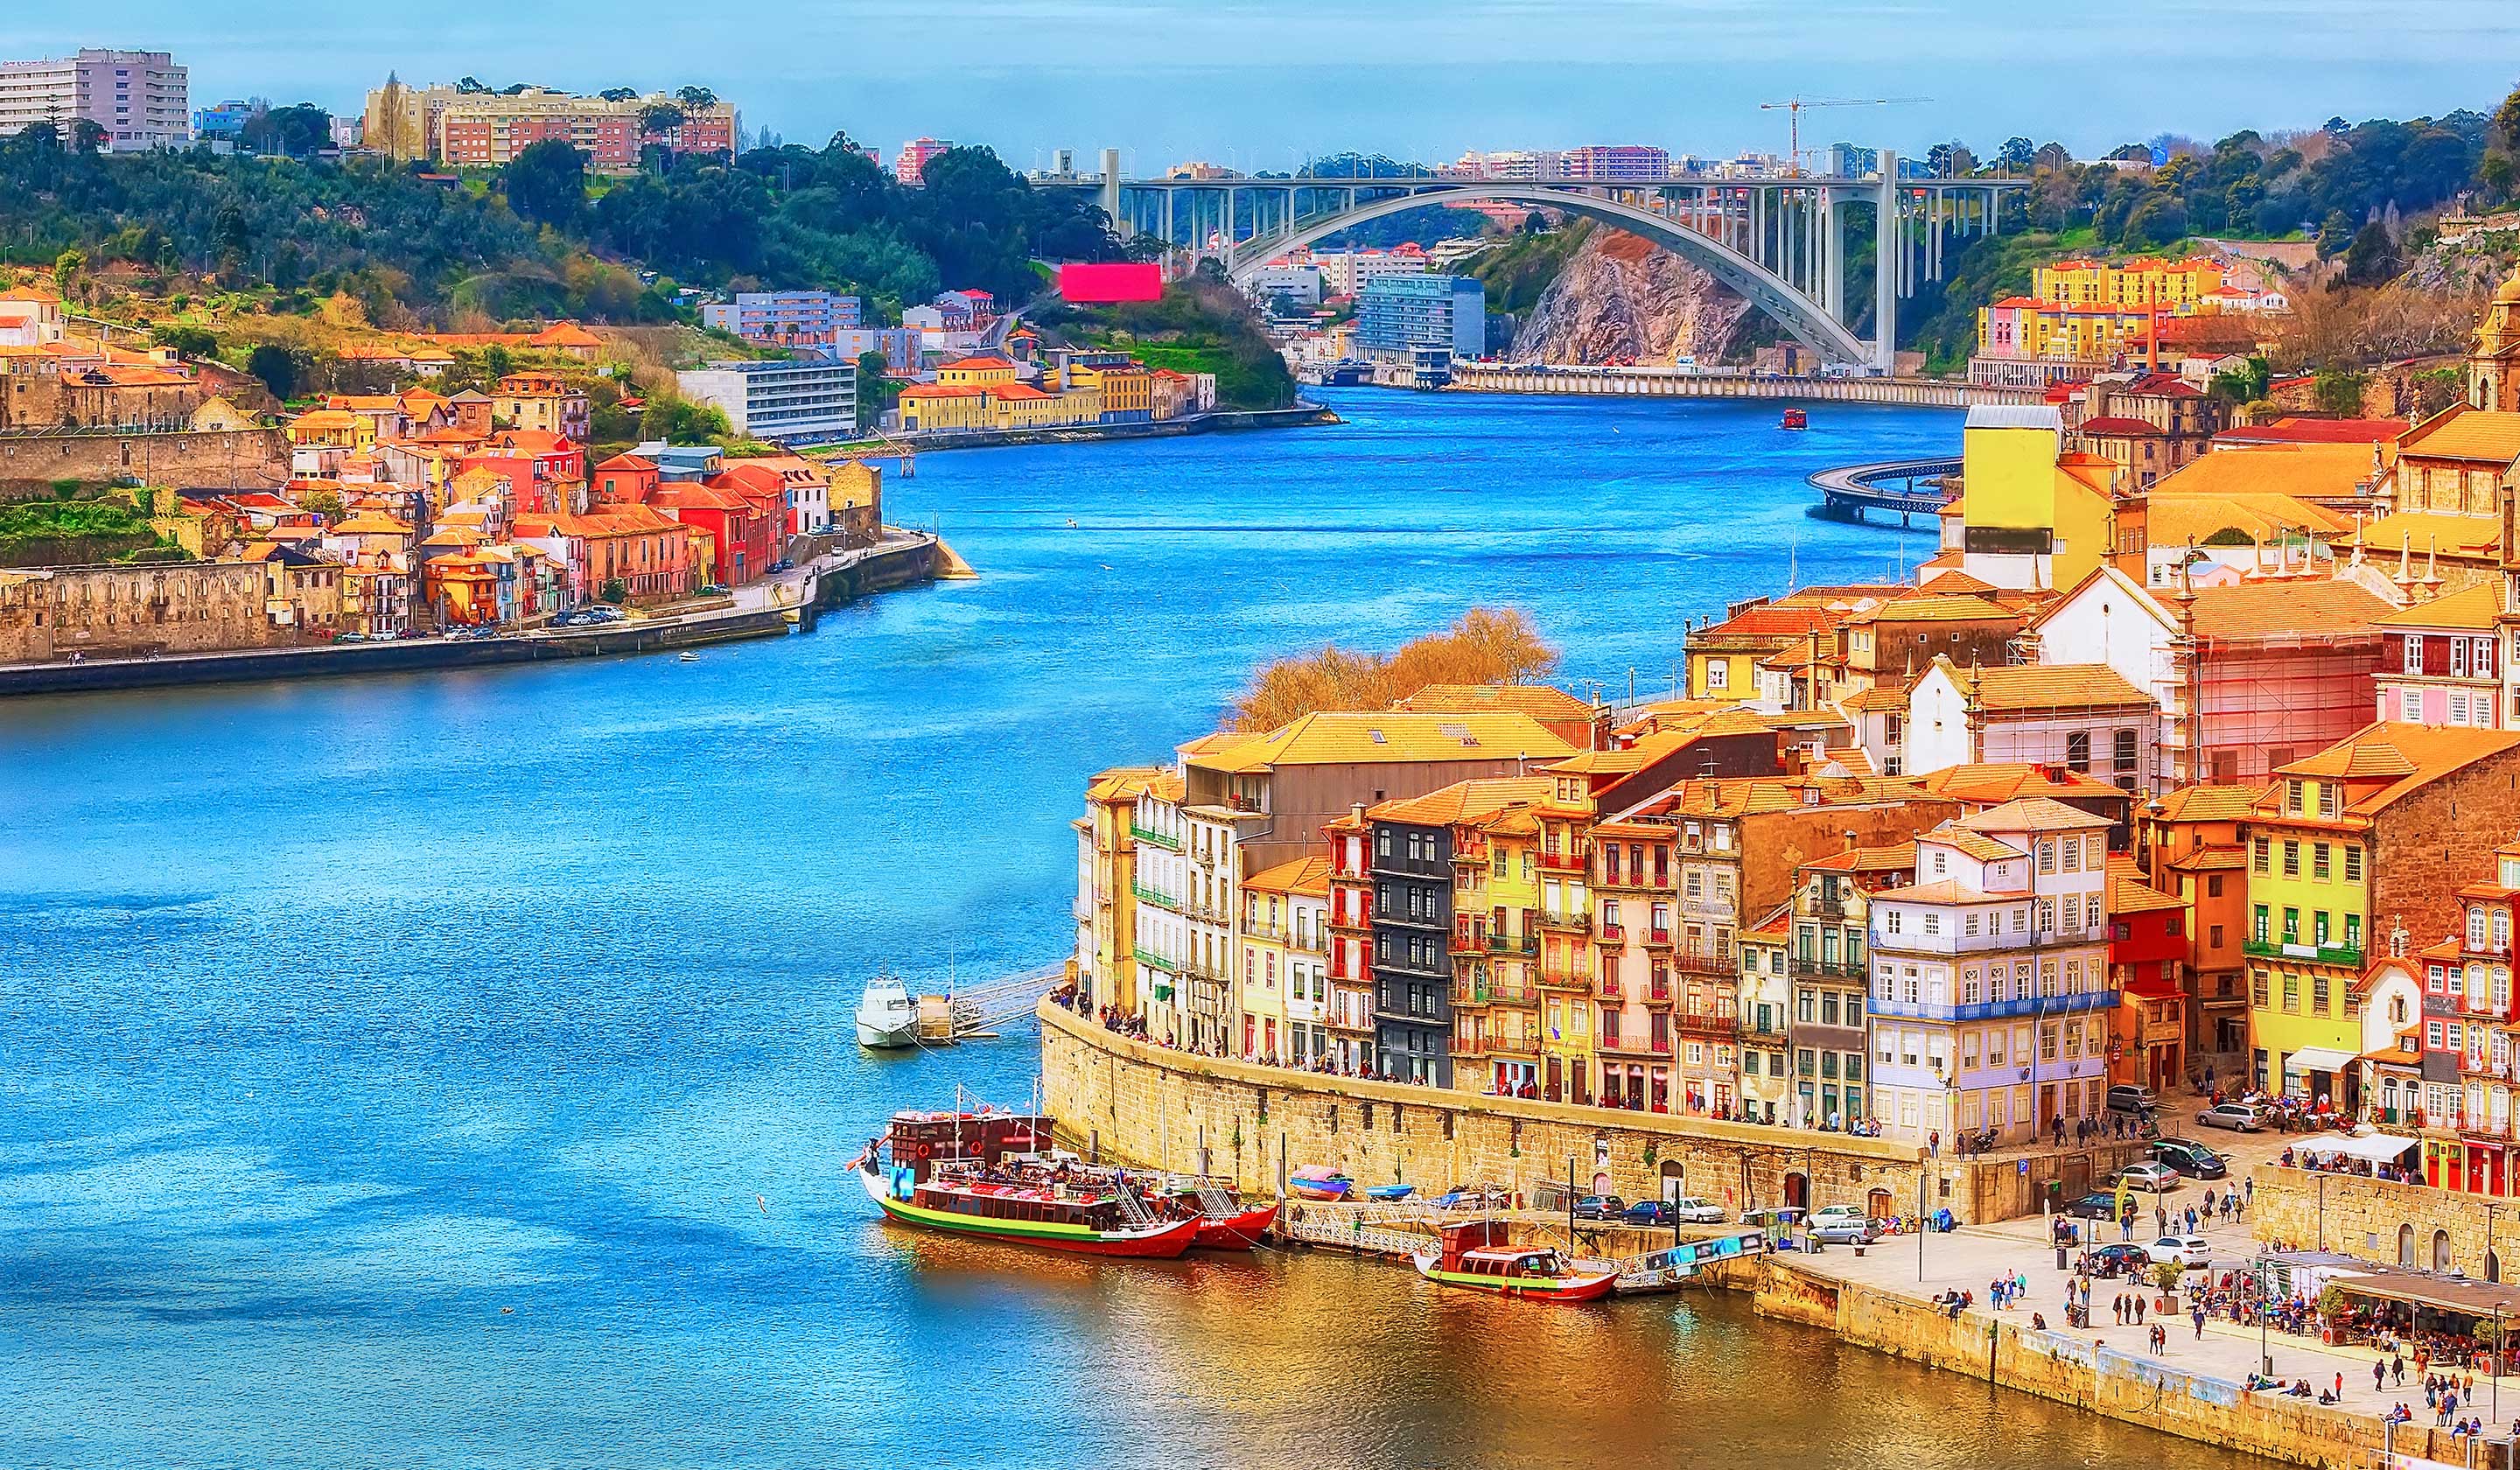 douro river cruise day